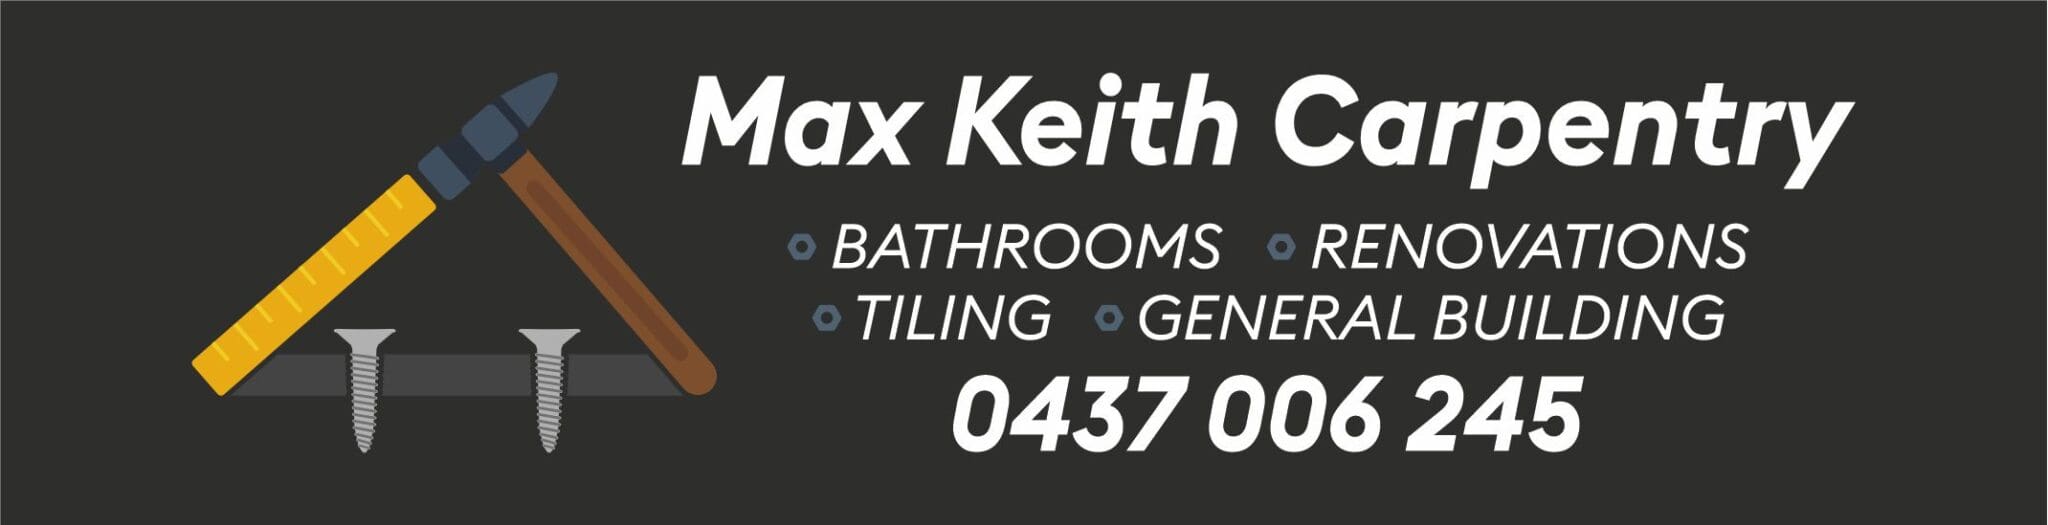 Max Kieth Carpentry sponsor logo banner